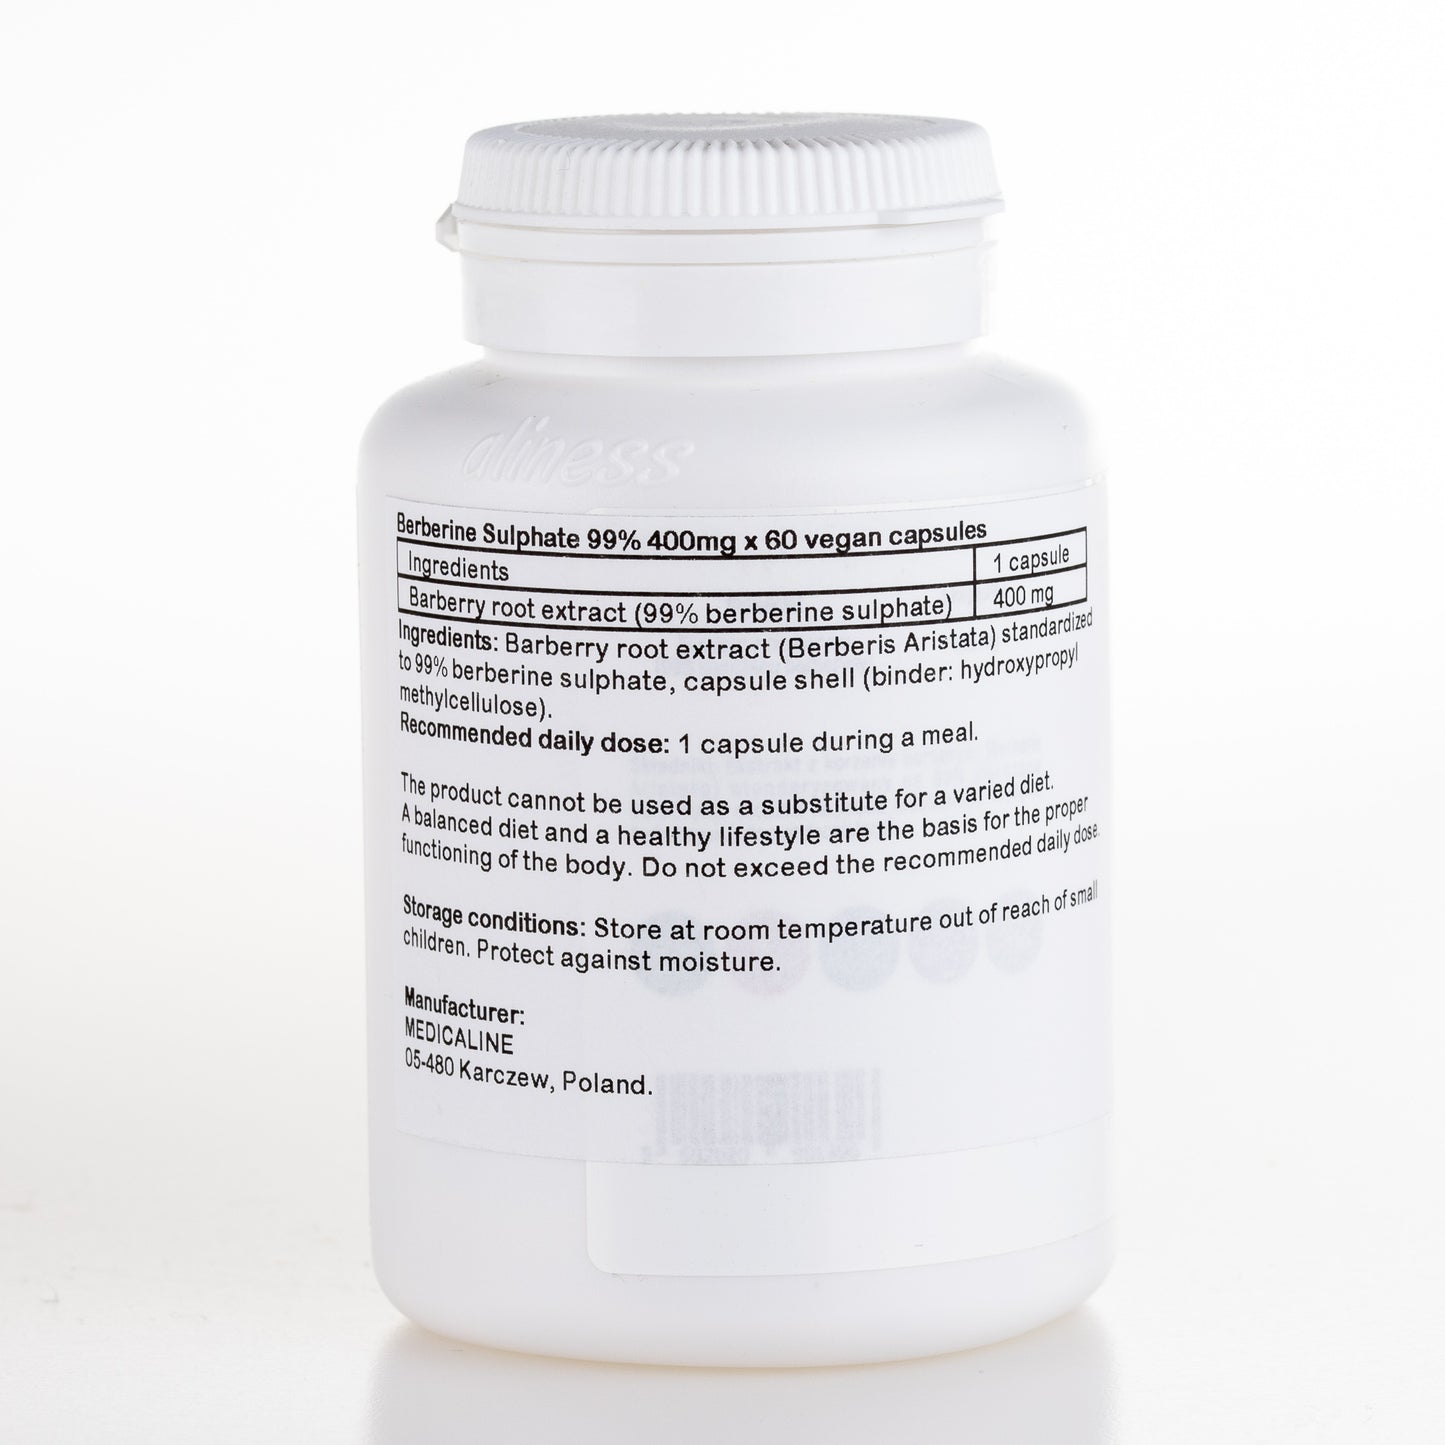 Berberine Sulphate 99% 400mg, 60 vegan capsules, Candida and thrush cleanse, PCOS